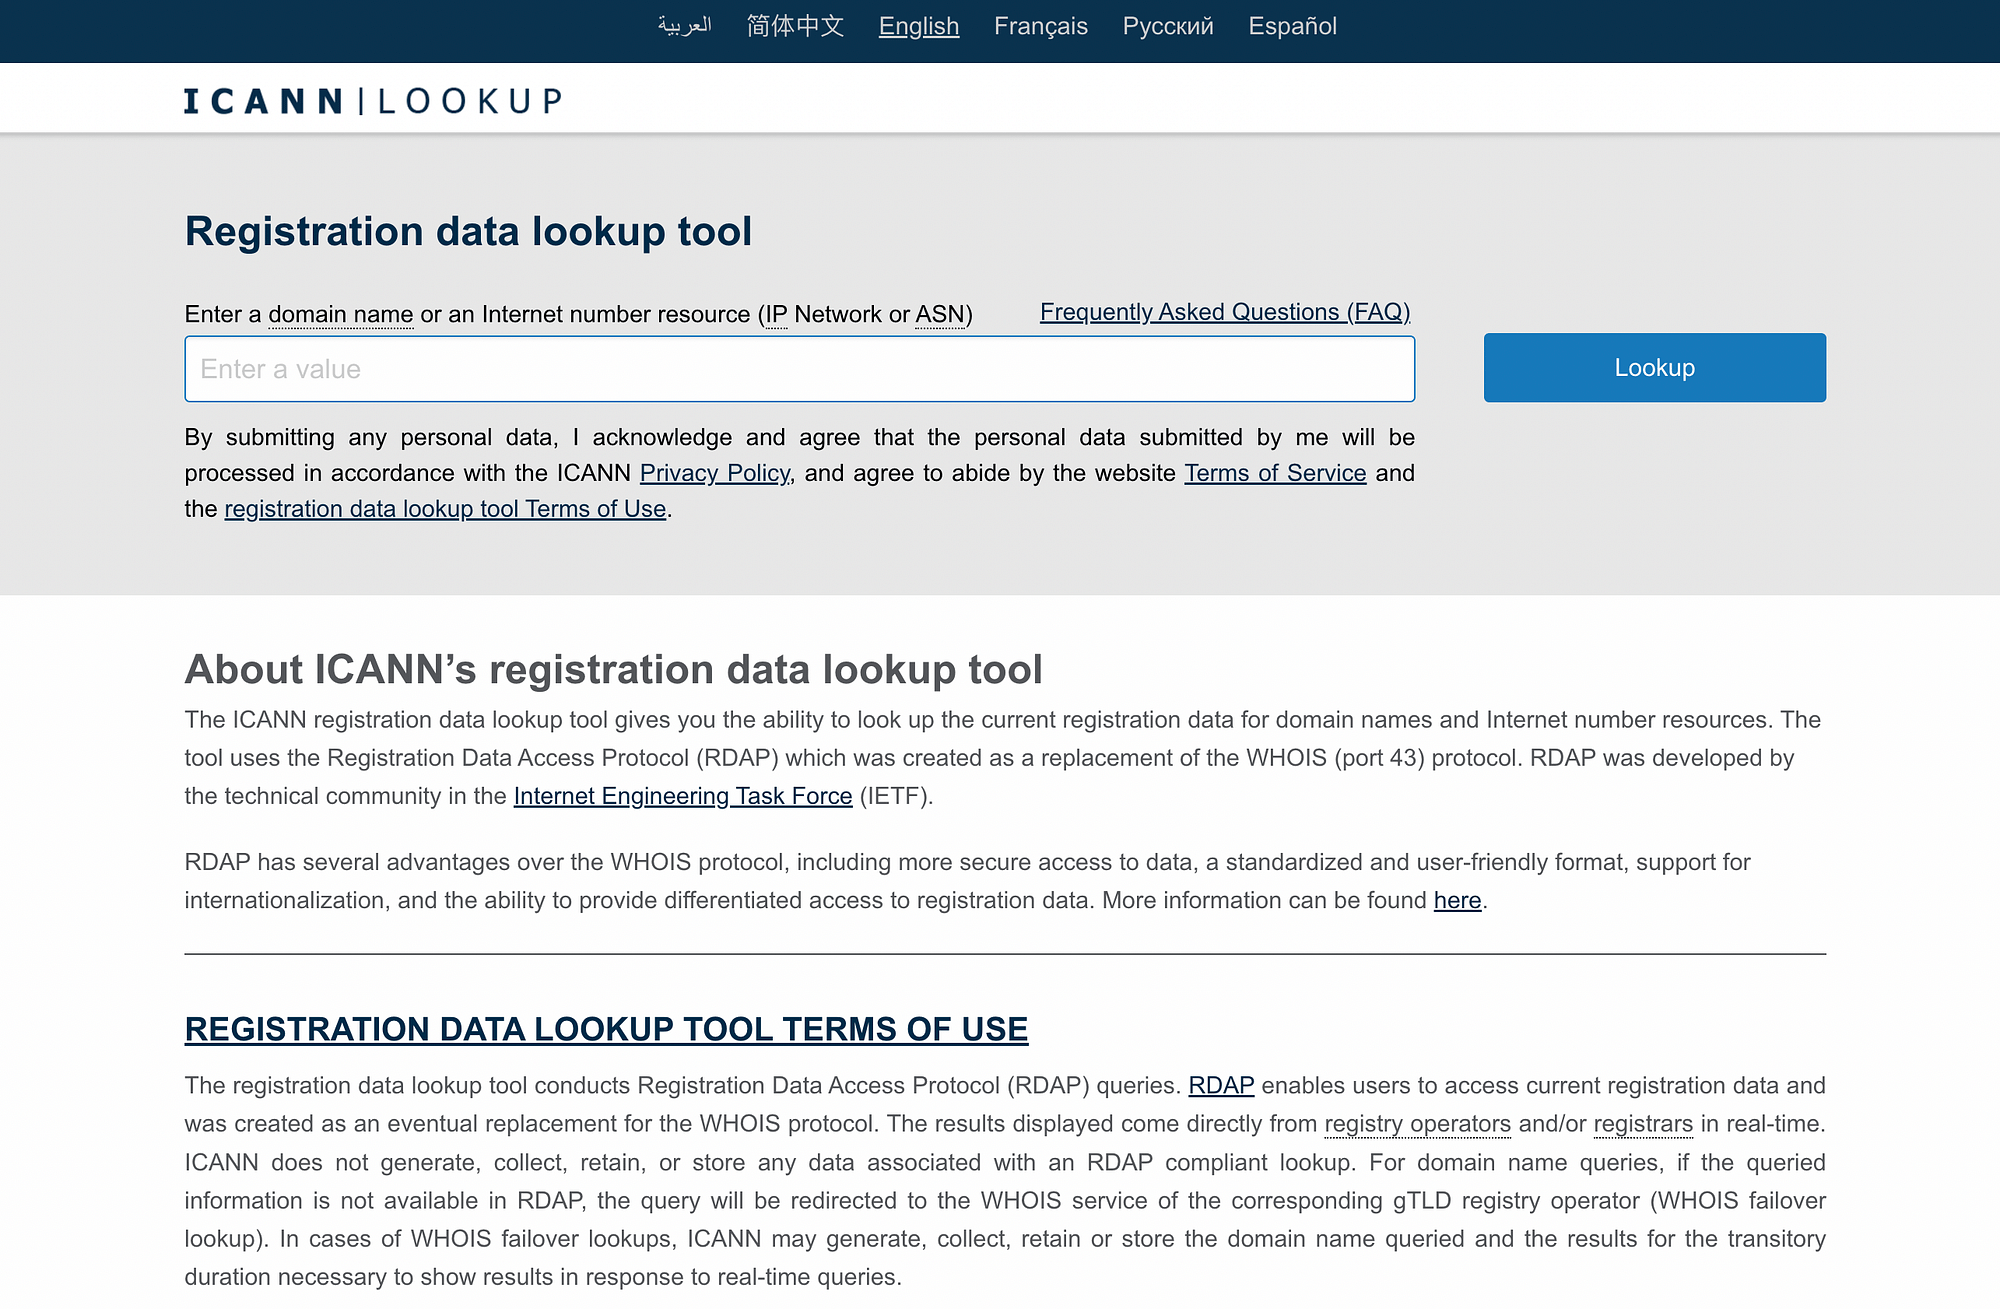 The ICANN Lookup tool